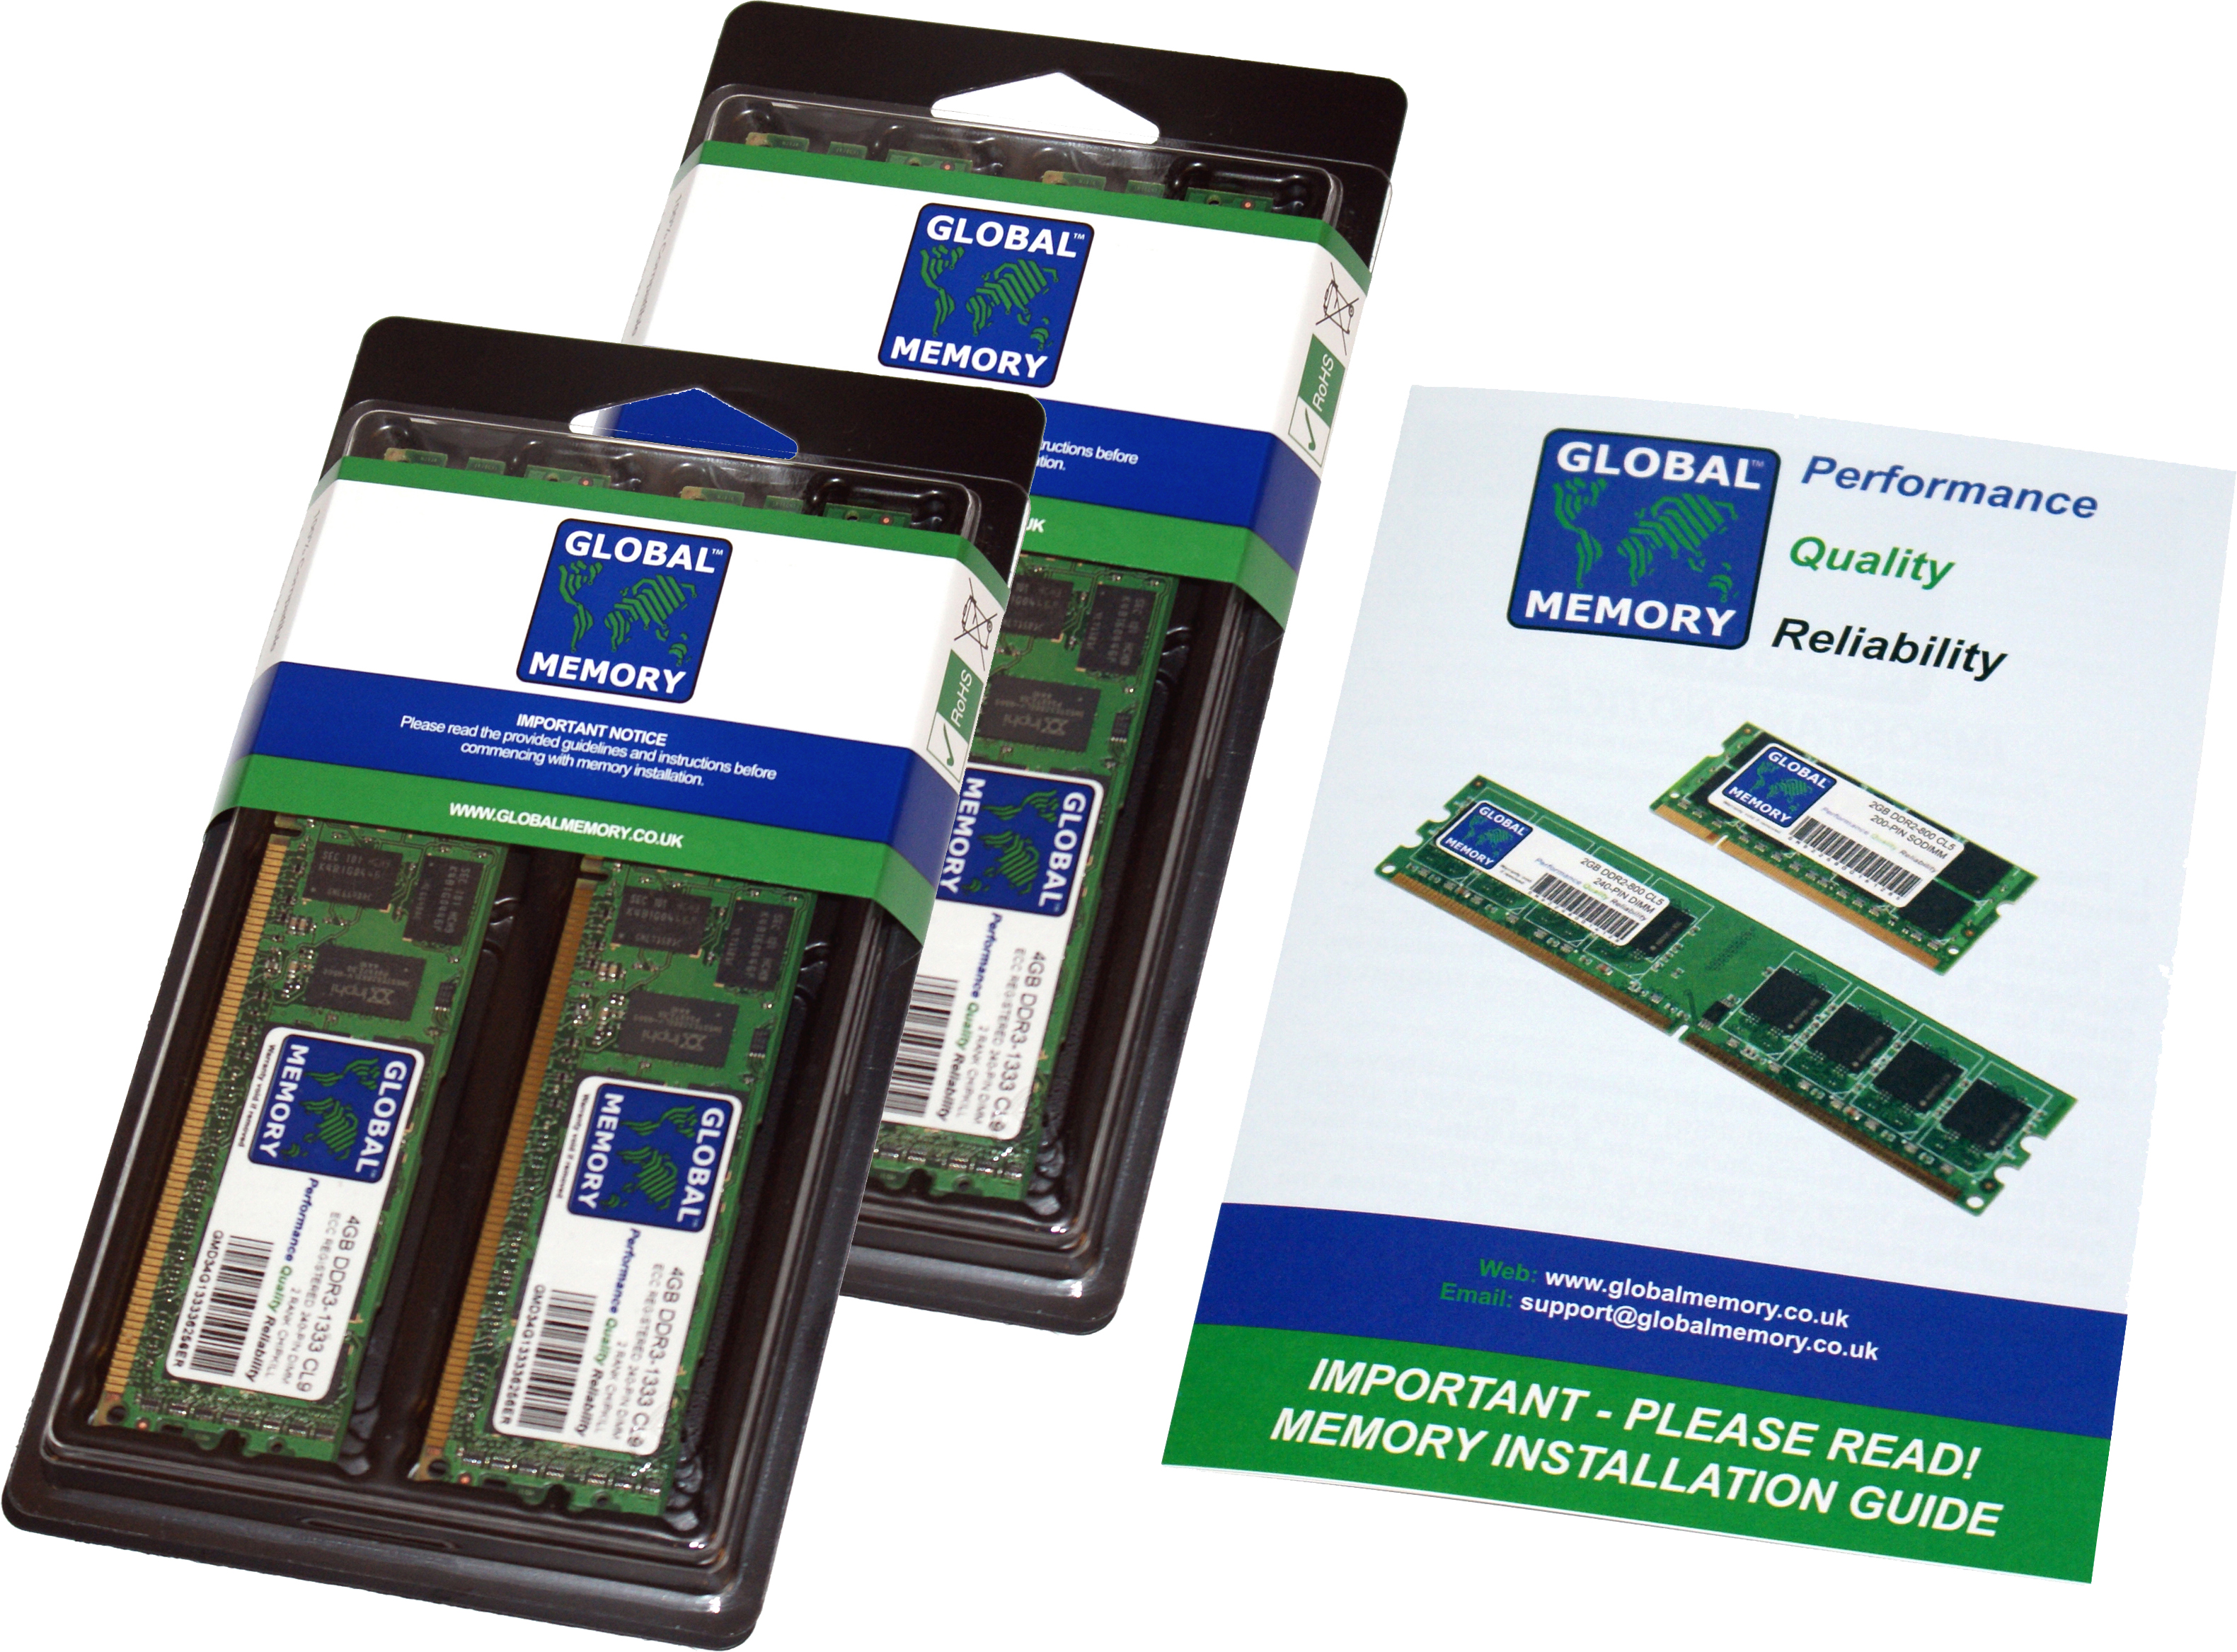 128GB (4 x 32GB) DDR4 2666MHz PC4-21300 288-PIN ECC REGISTERED DIMM (RDIMM) MEMORY RAM KIT FOR SERVERS/WORKSTATIONS/MOTHERBOARDS (8 RANK KIT CHIPKILL)